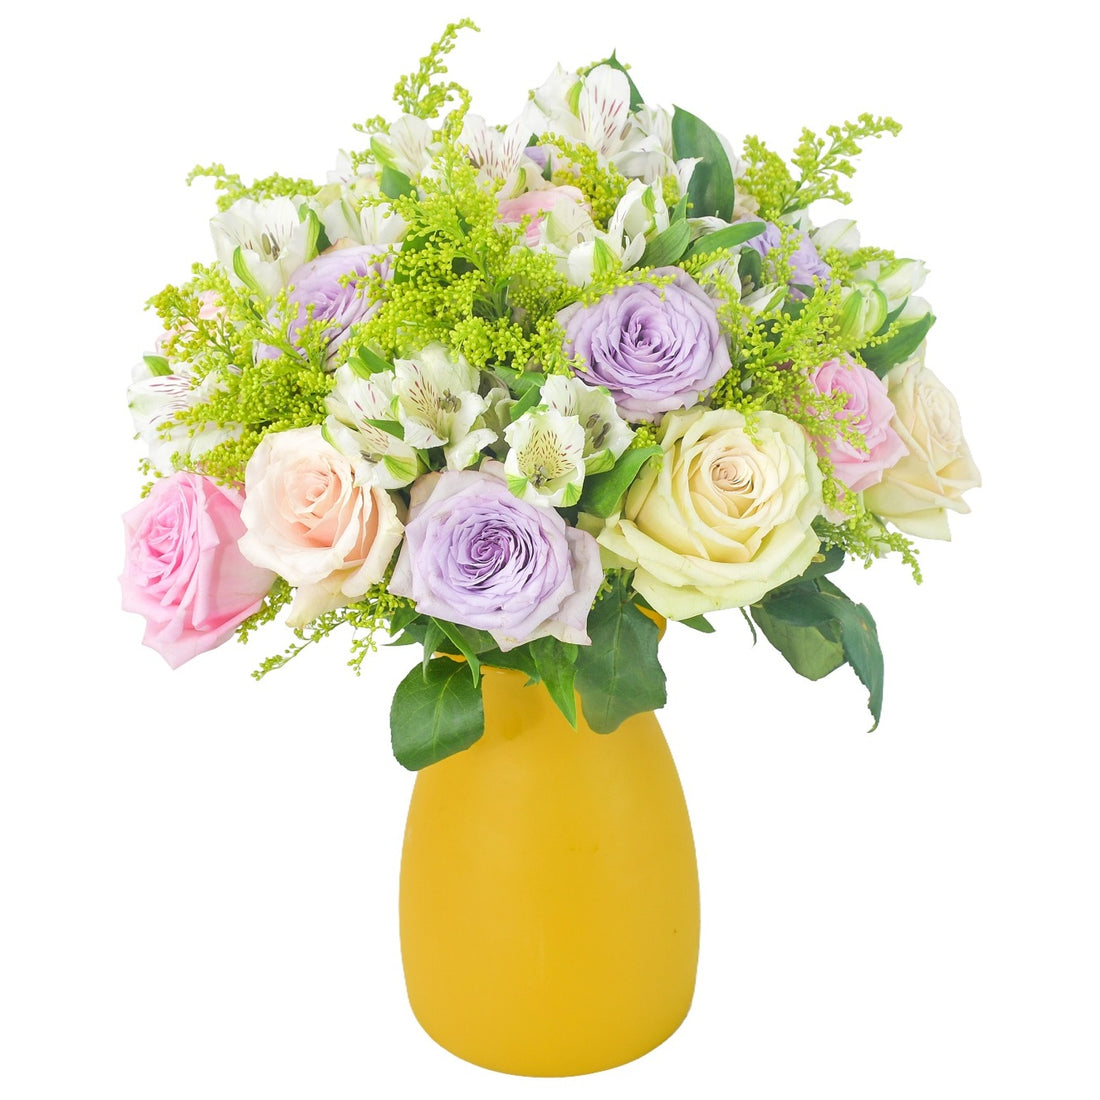 pastel passion floral design in a vase